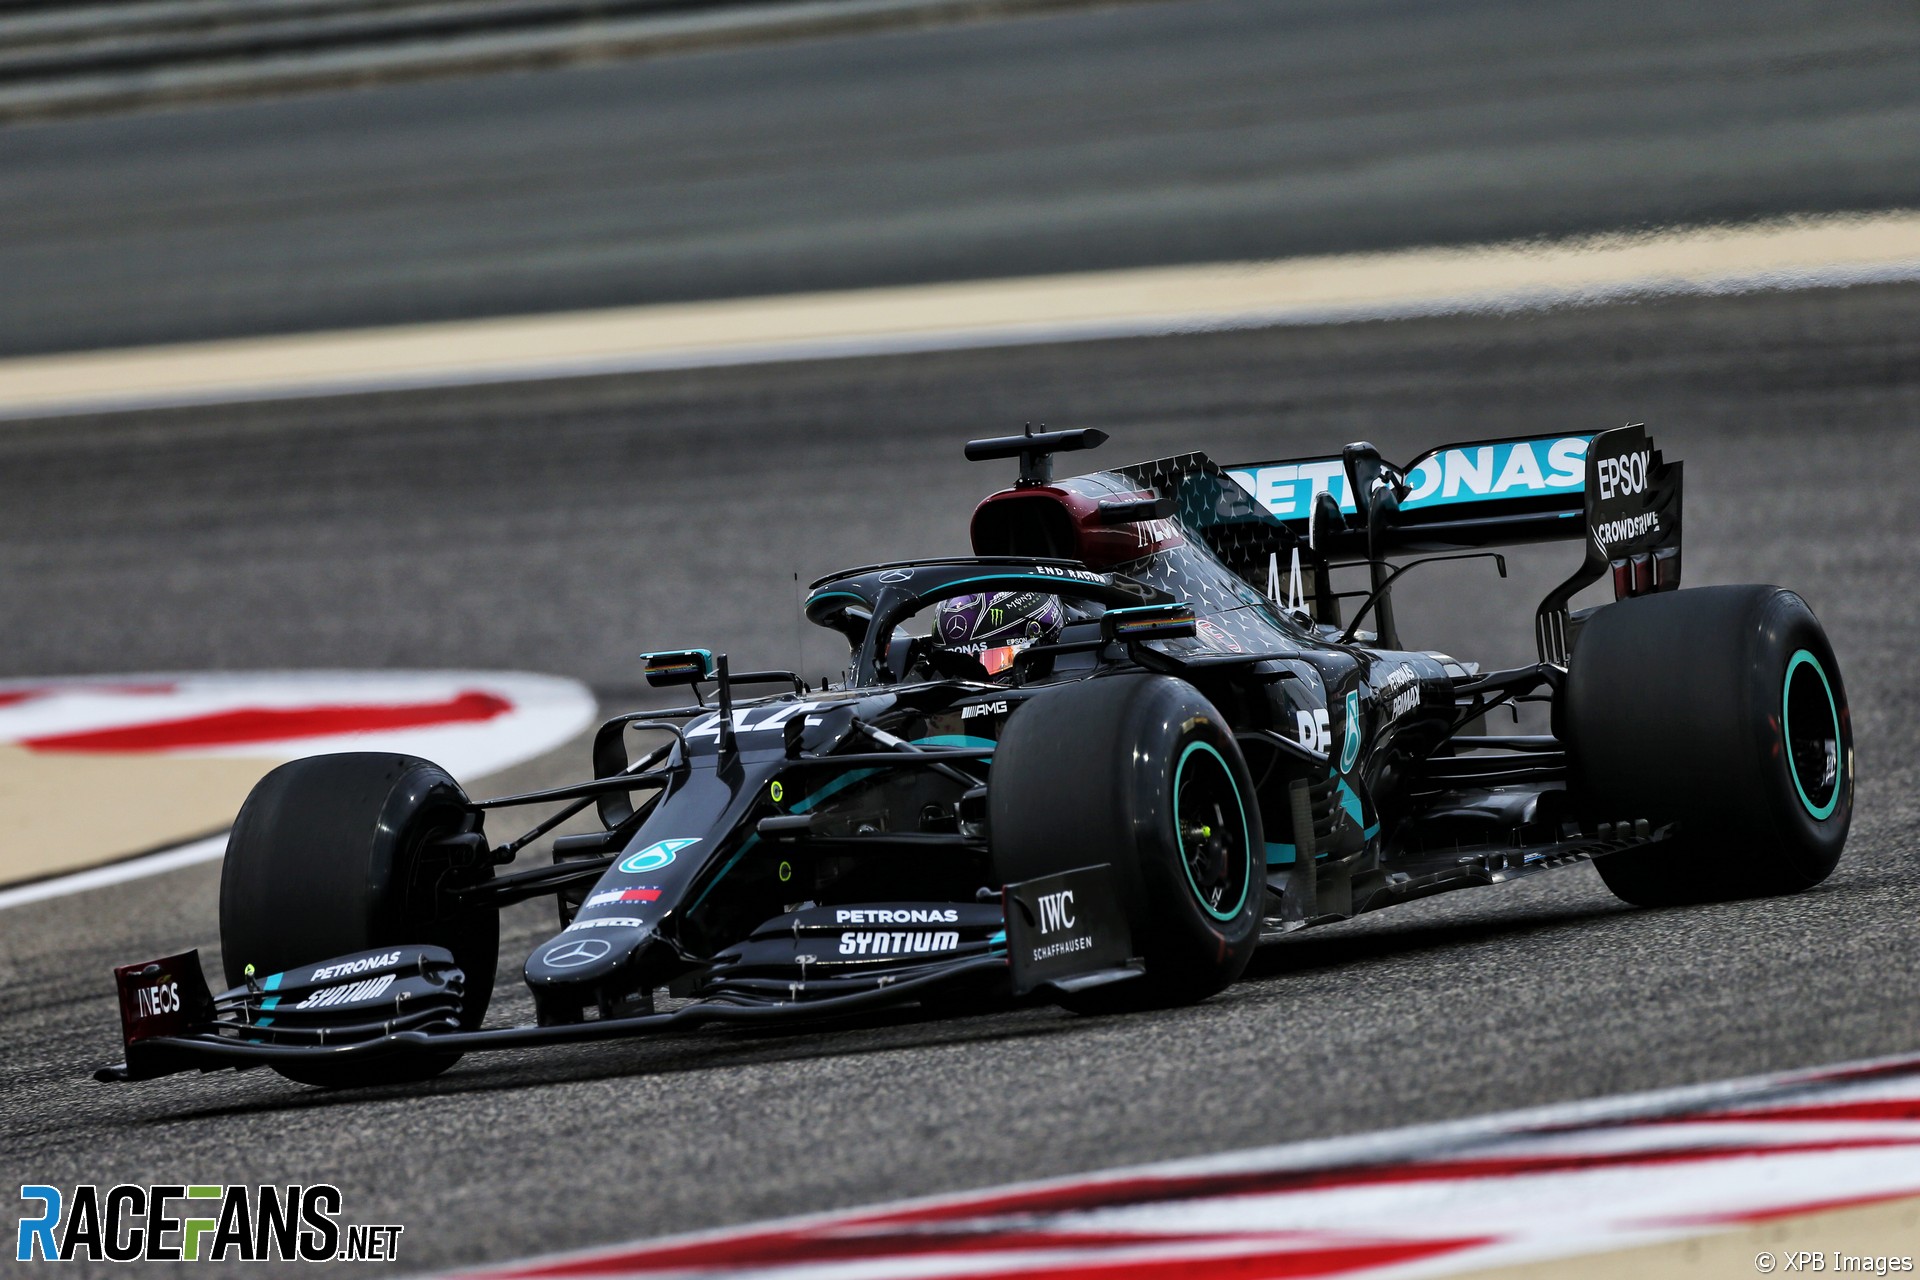 Lewis Hamilton, Mercedes, Bahrain International Circuit, 2020